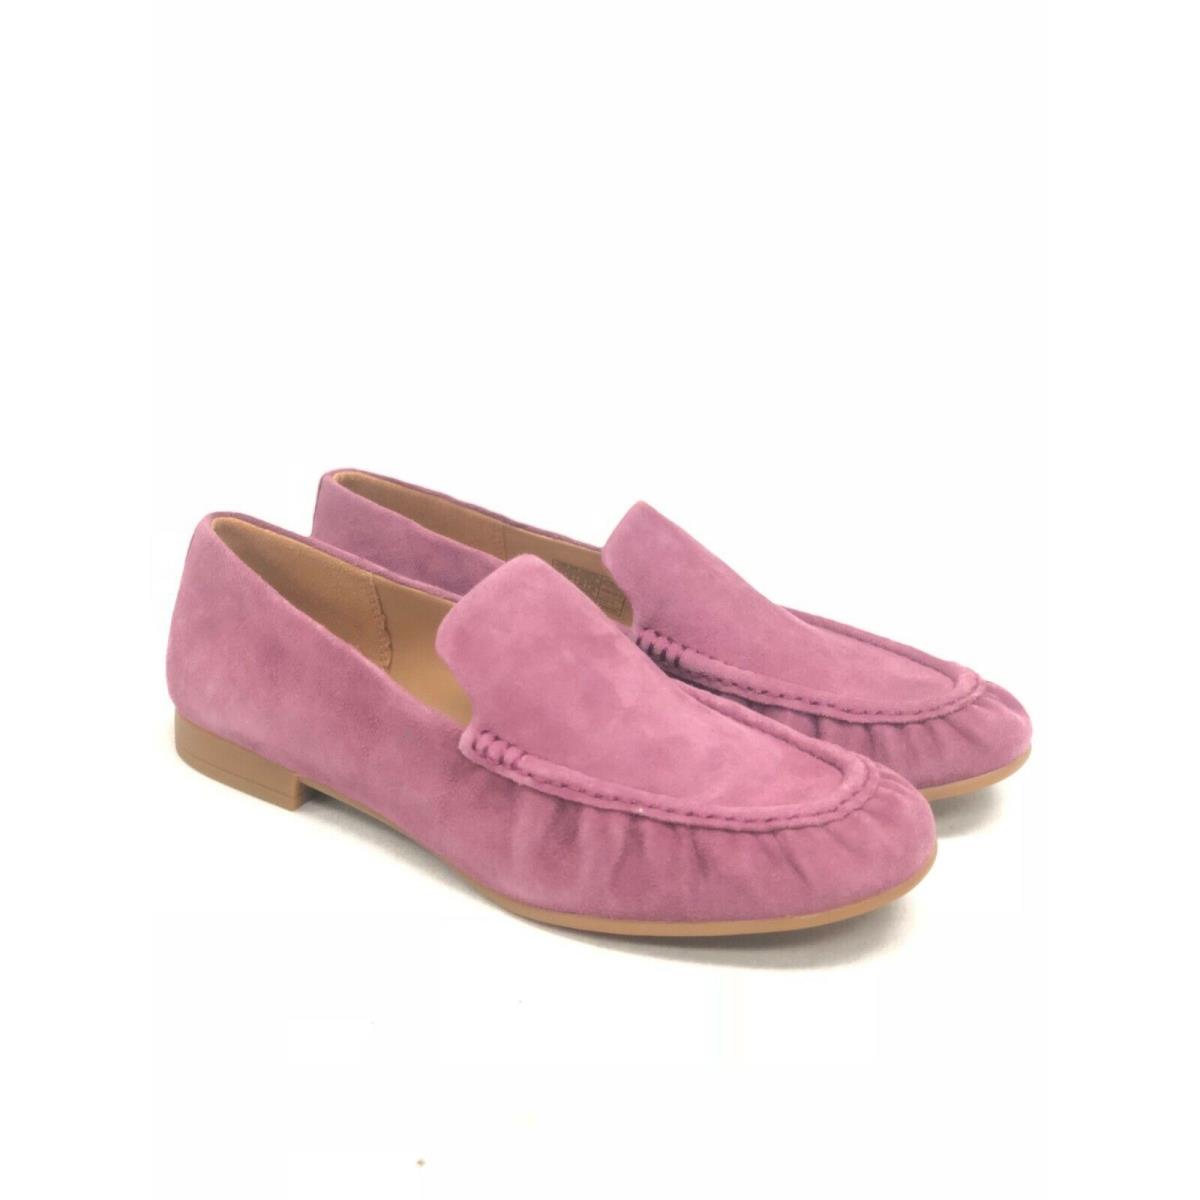 Ugg Australia Women`s Vivian Bougainvillea Pink Loafers Shoes 1104714 .5 Heel